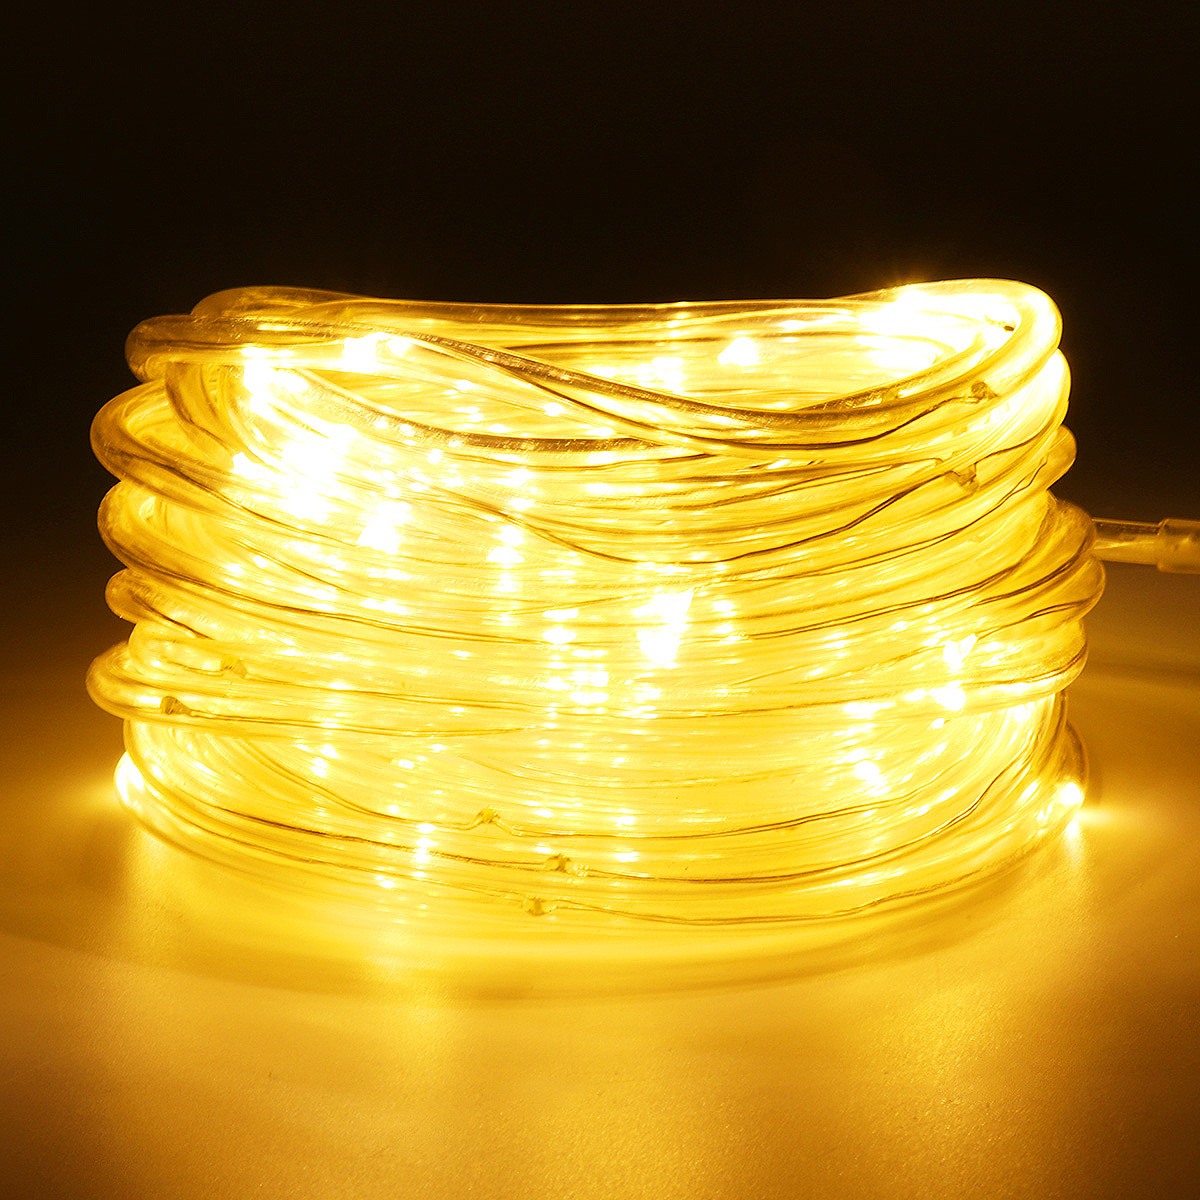 10M-100LED-Outdoor-Tube-Rope-Strip-String-Light-RGB-Lamp-Xmas-Home-Decor-Lights-with-EU-Plug-1795566-6